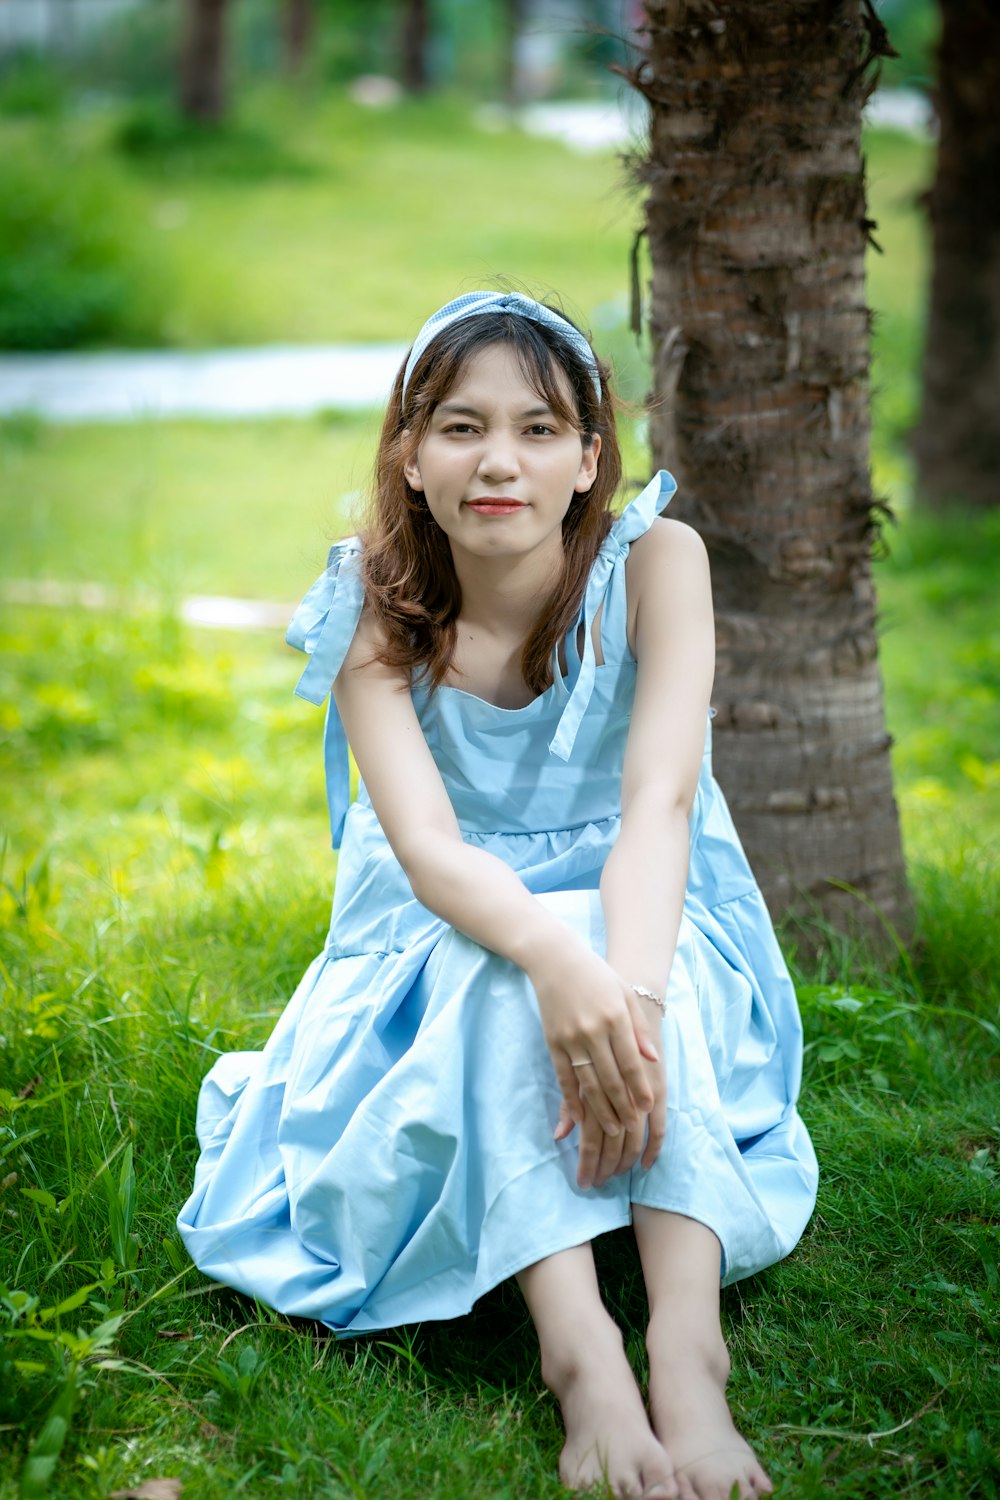 girl in white sleeveless dress sitting on green grass field